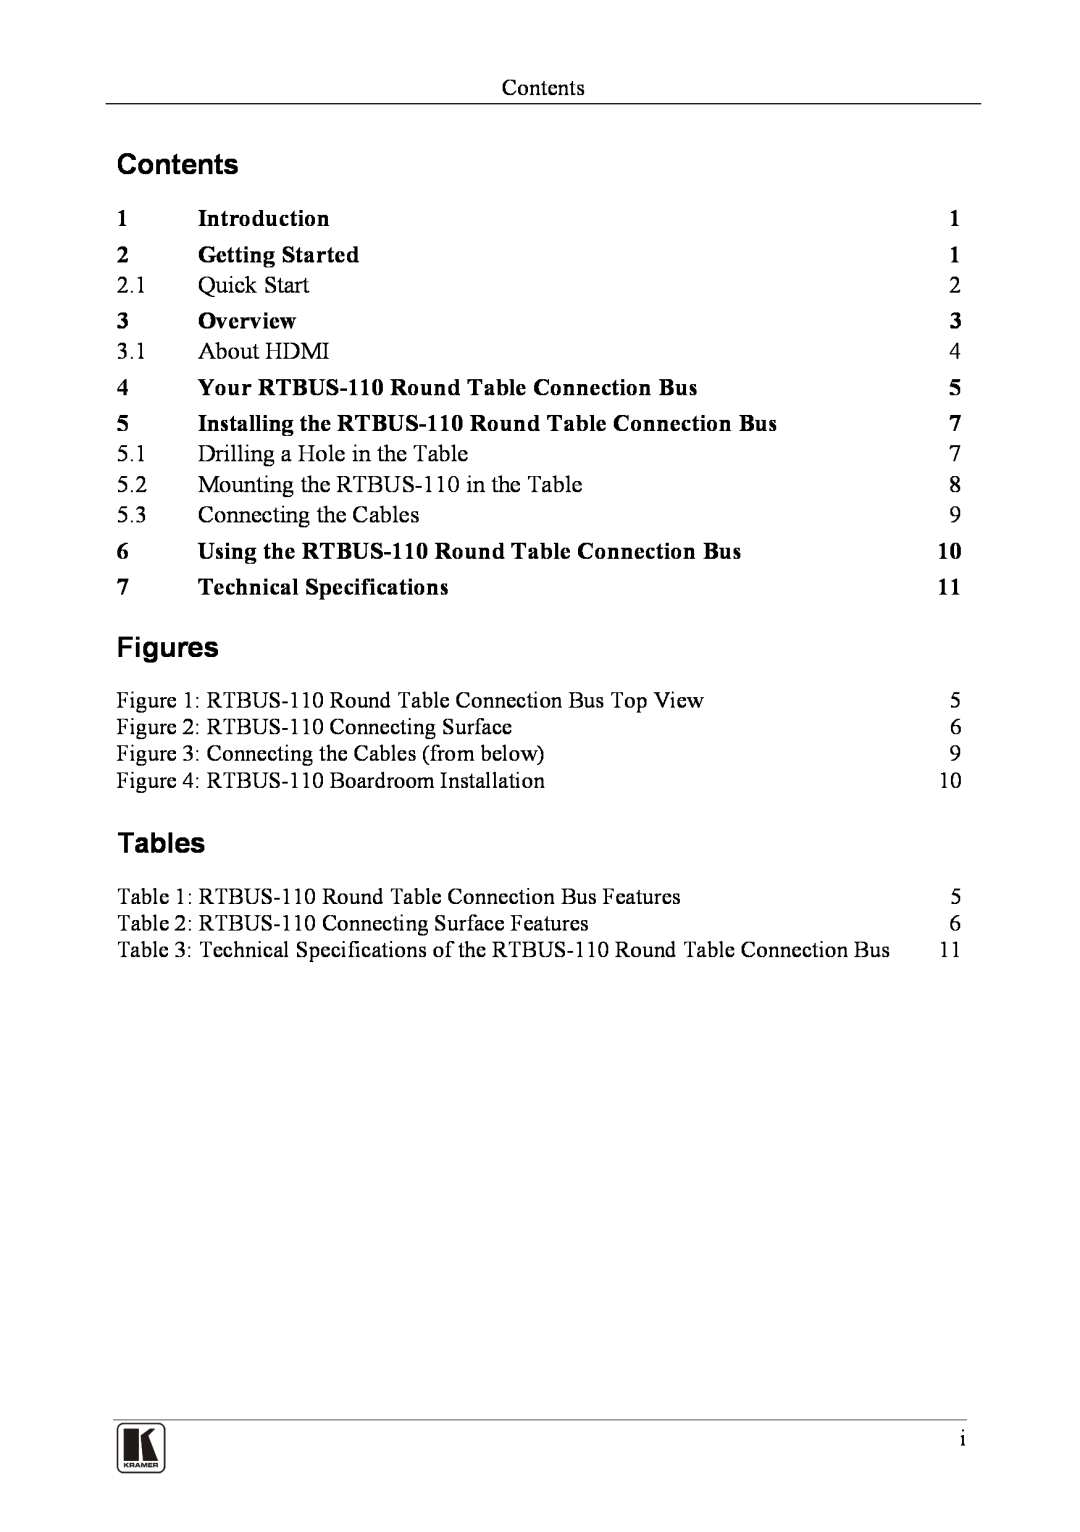 Kramer Electronics RTBUS-110 user manual Contents, Figures, Tables 